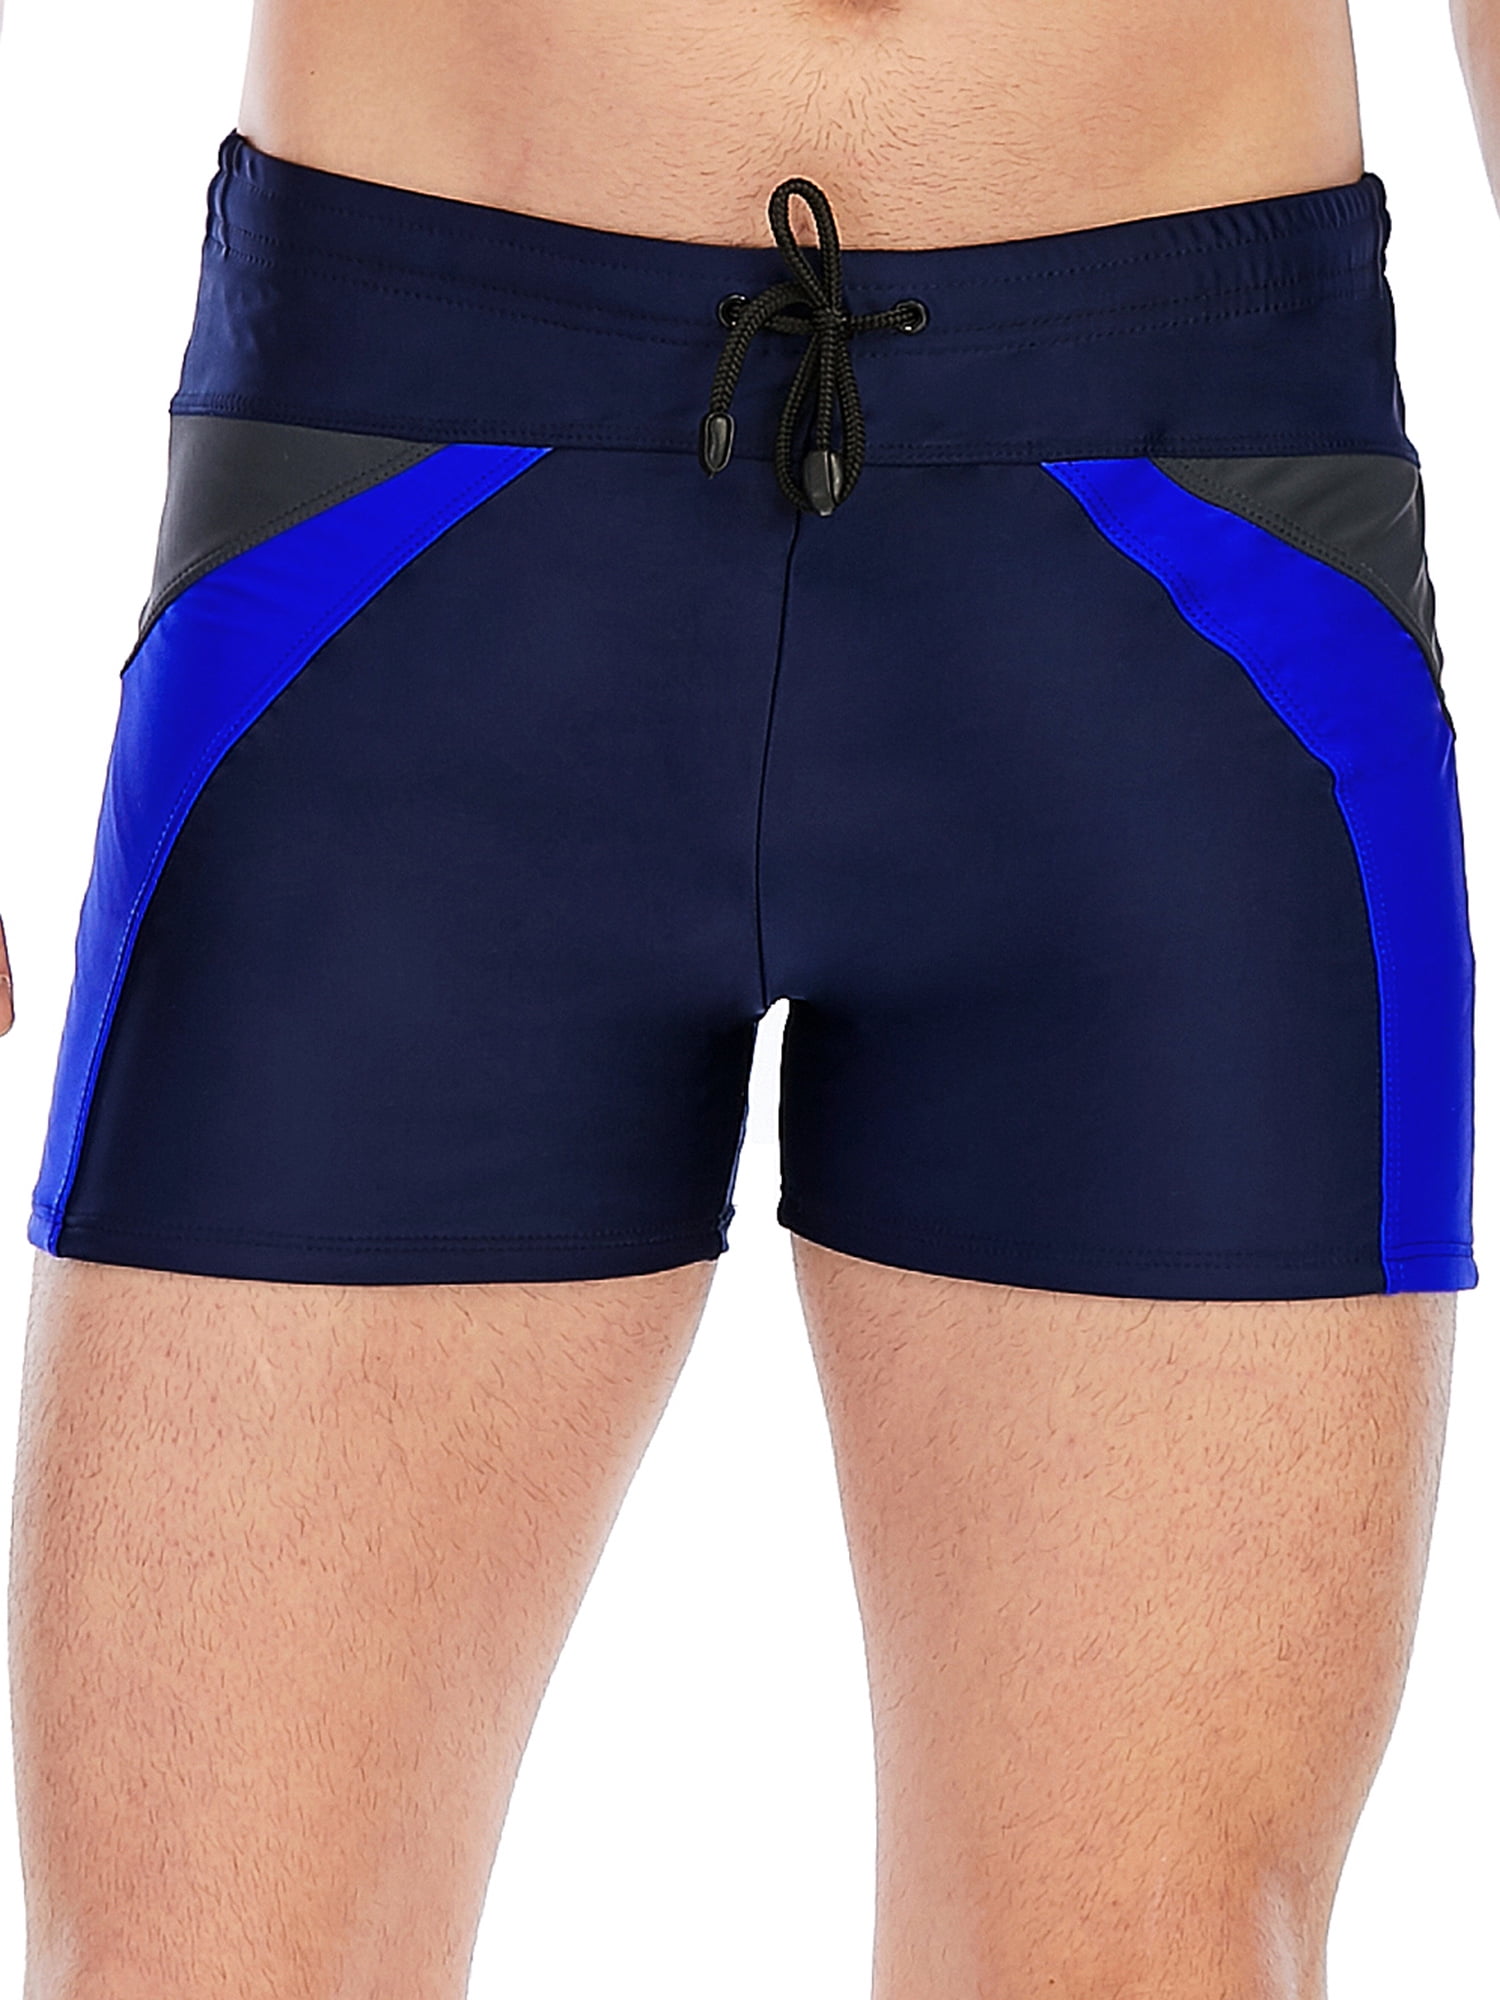 Sundek Synthetic Logo Print Nylon Swim Briefs in Navy for Men Blue Mens Clothing Underwear Boxers briefs 